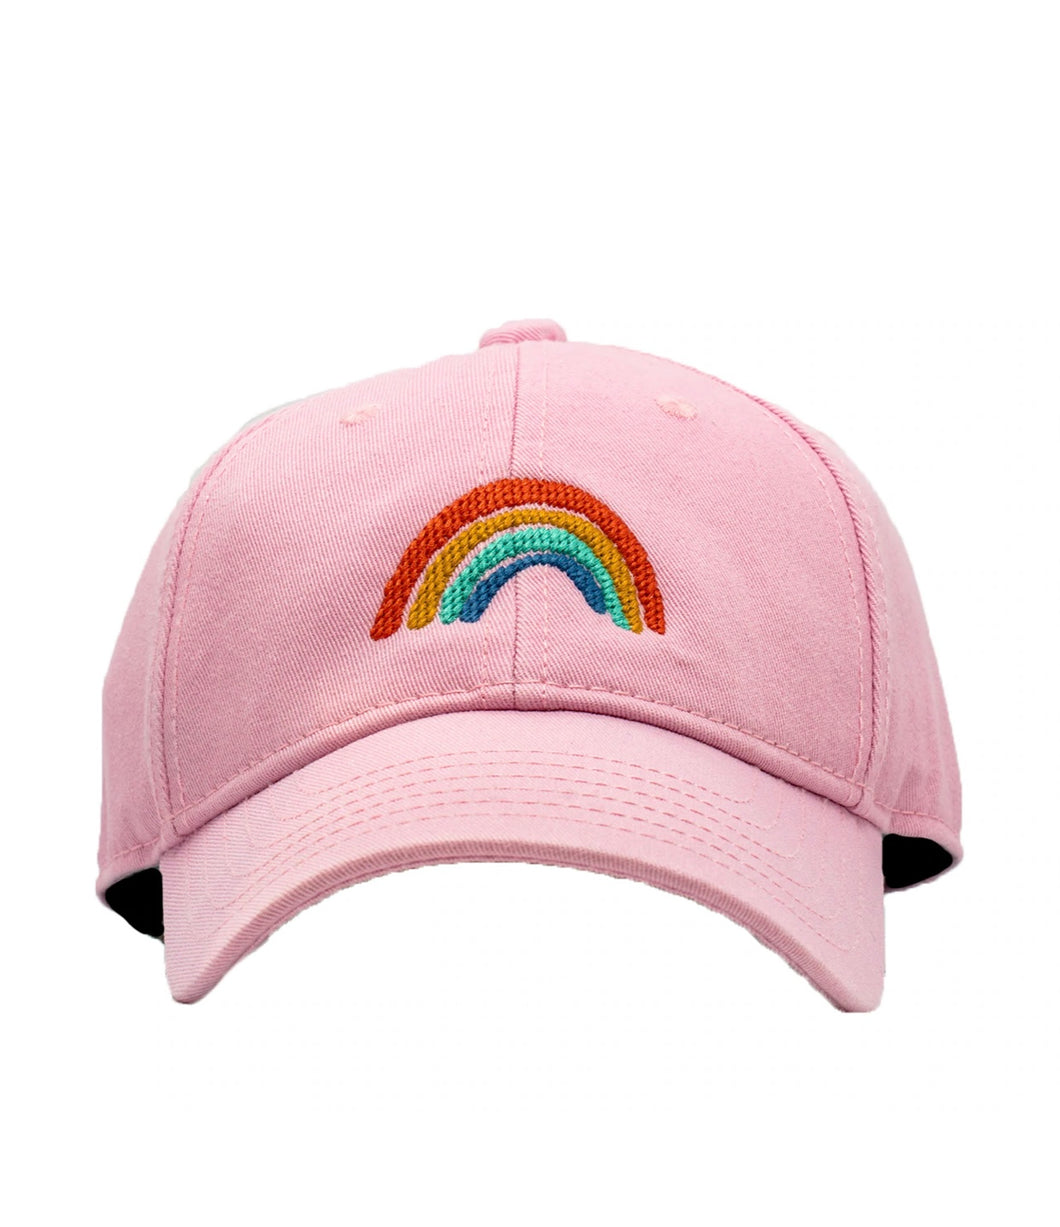 Harding Lane Pink Hat with Rainbow